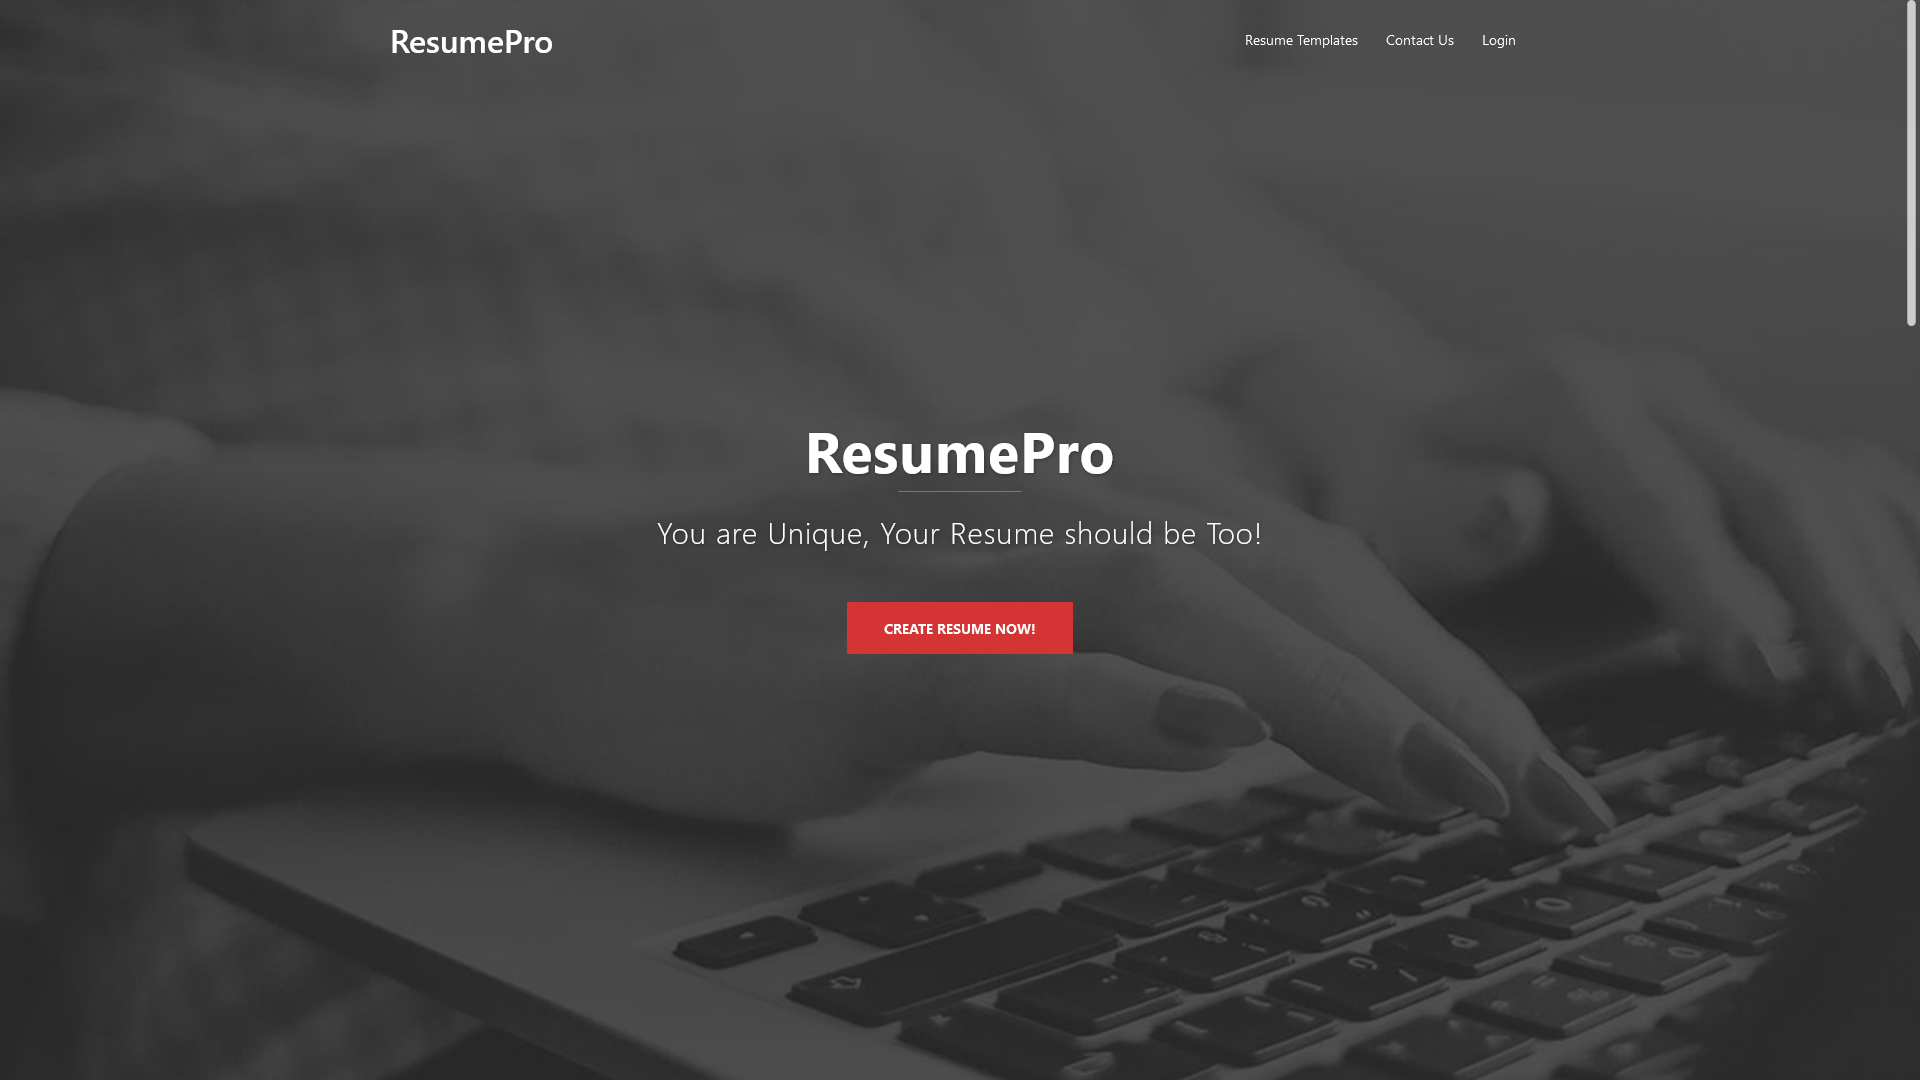 ResumePro Landing page